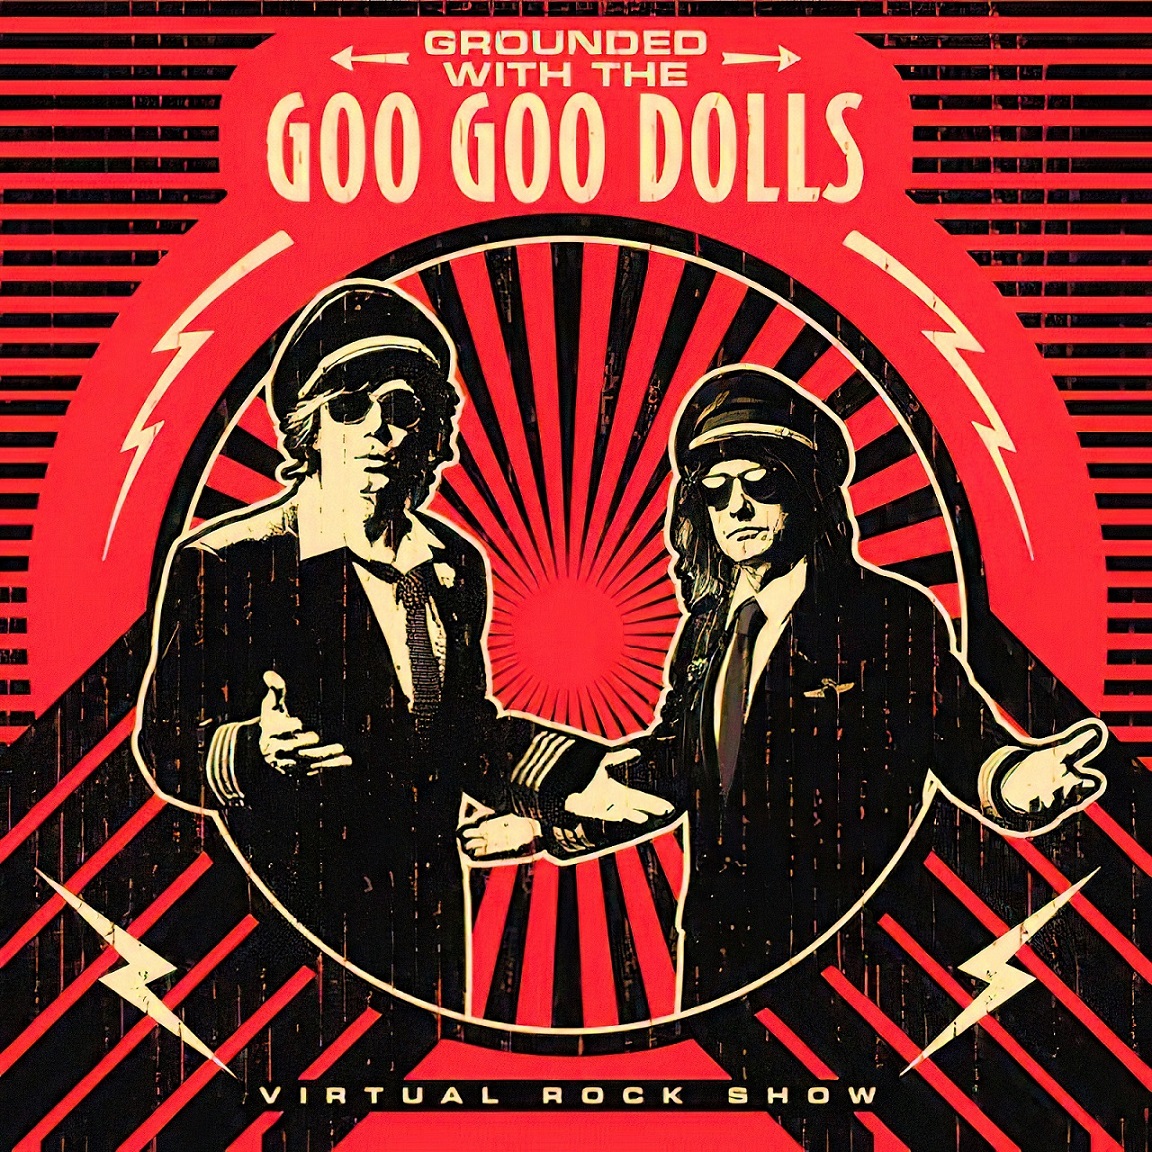 The Goo Goo Dolls - Grounded with the Goo Goo Dolls (The Virtual Rock Show)